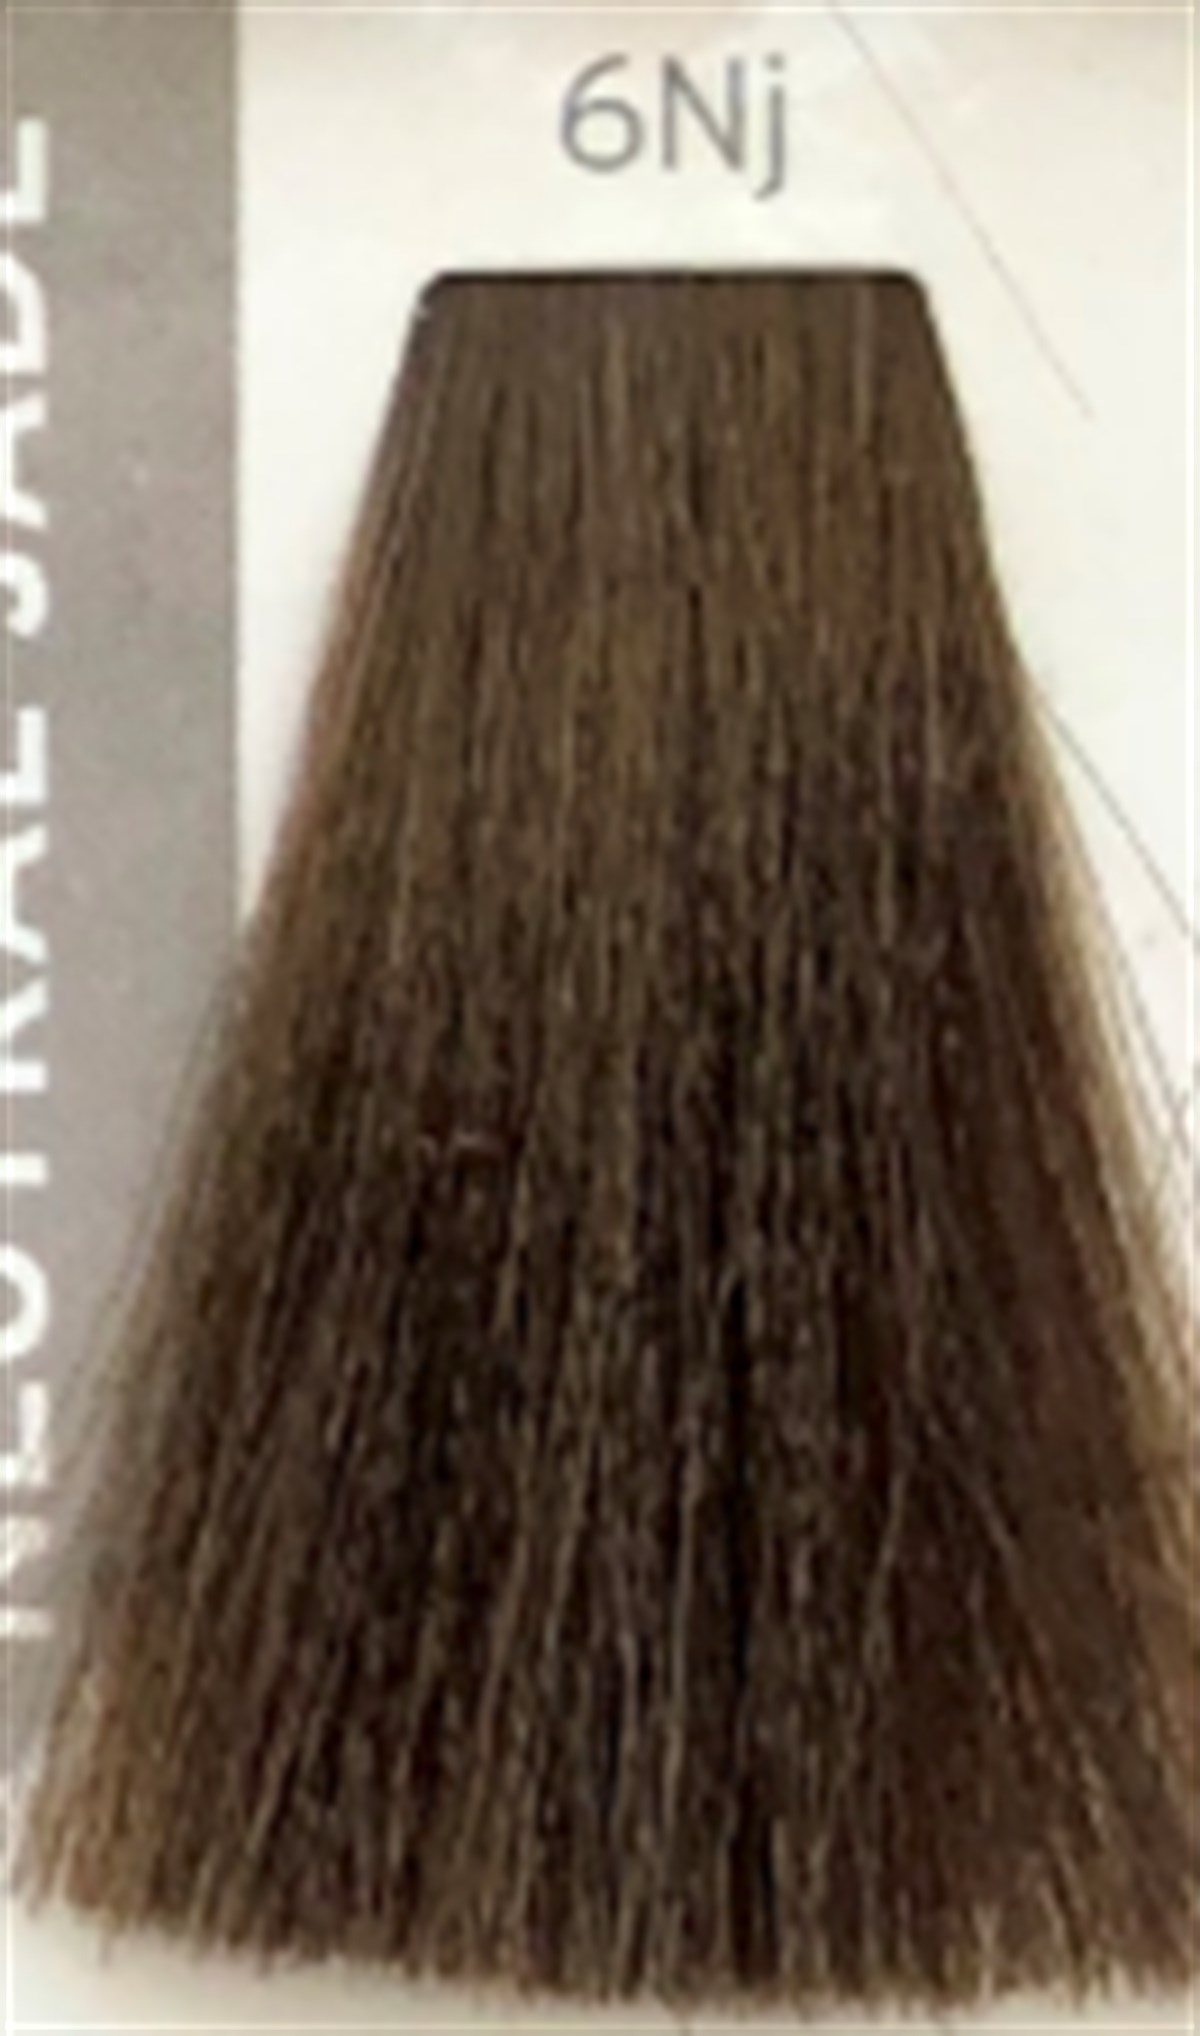 matrix saç boyası 6NJMATRİX SAÇ BOYASI-www.arzumkozmetik.com